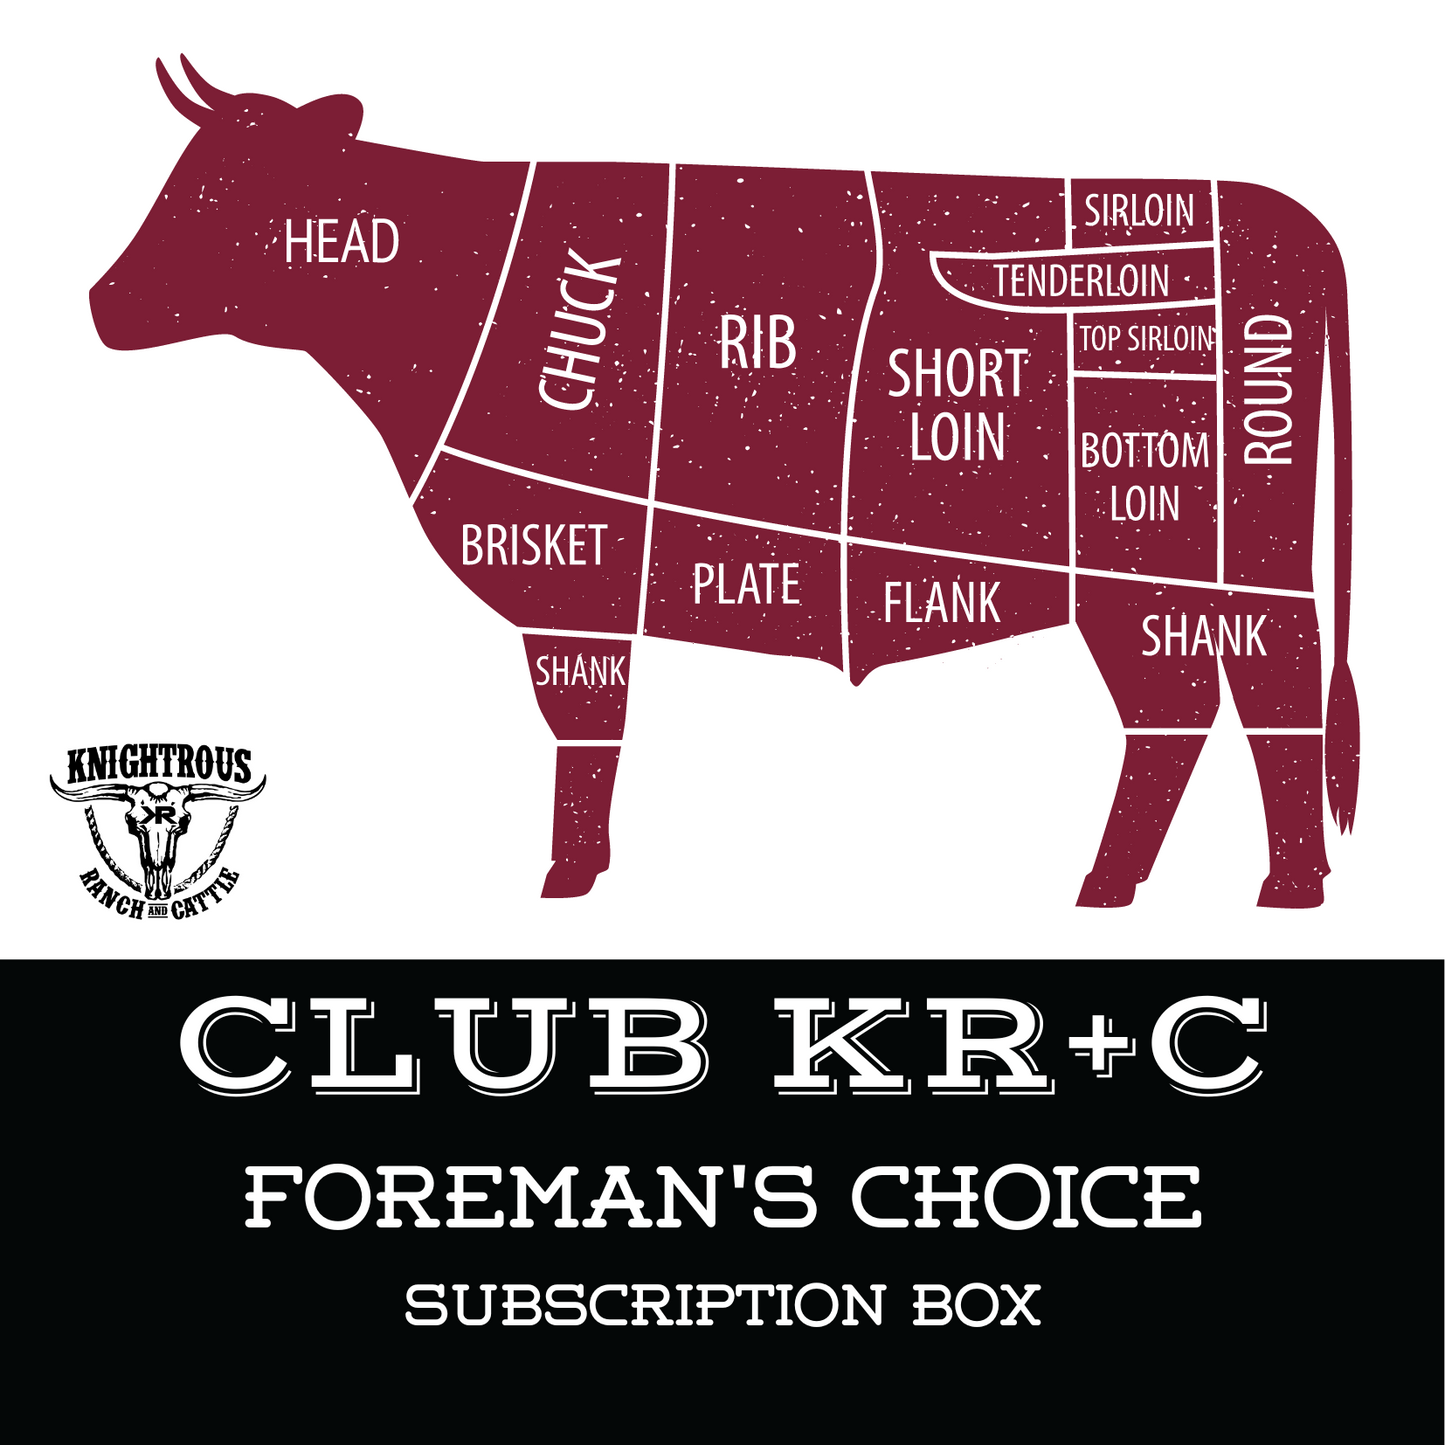 BOX: SUBSCRIPTION CLUB KR+C FOREMAN'S CHOICE BOX